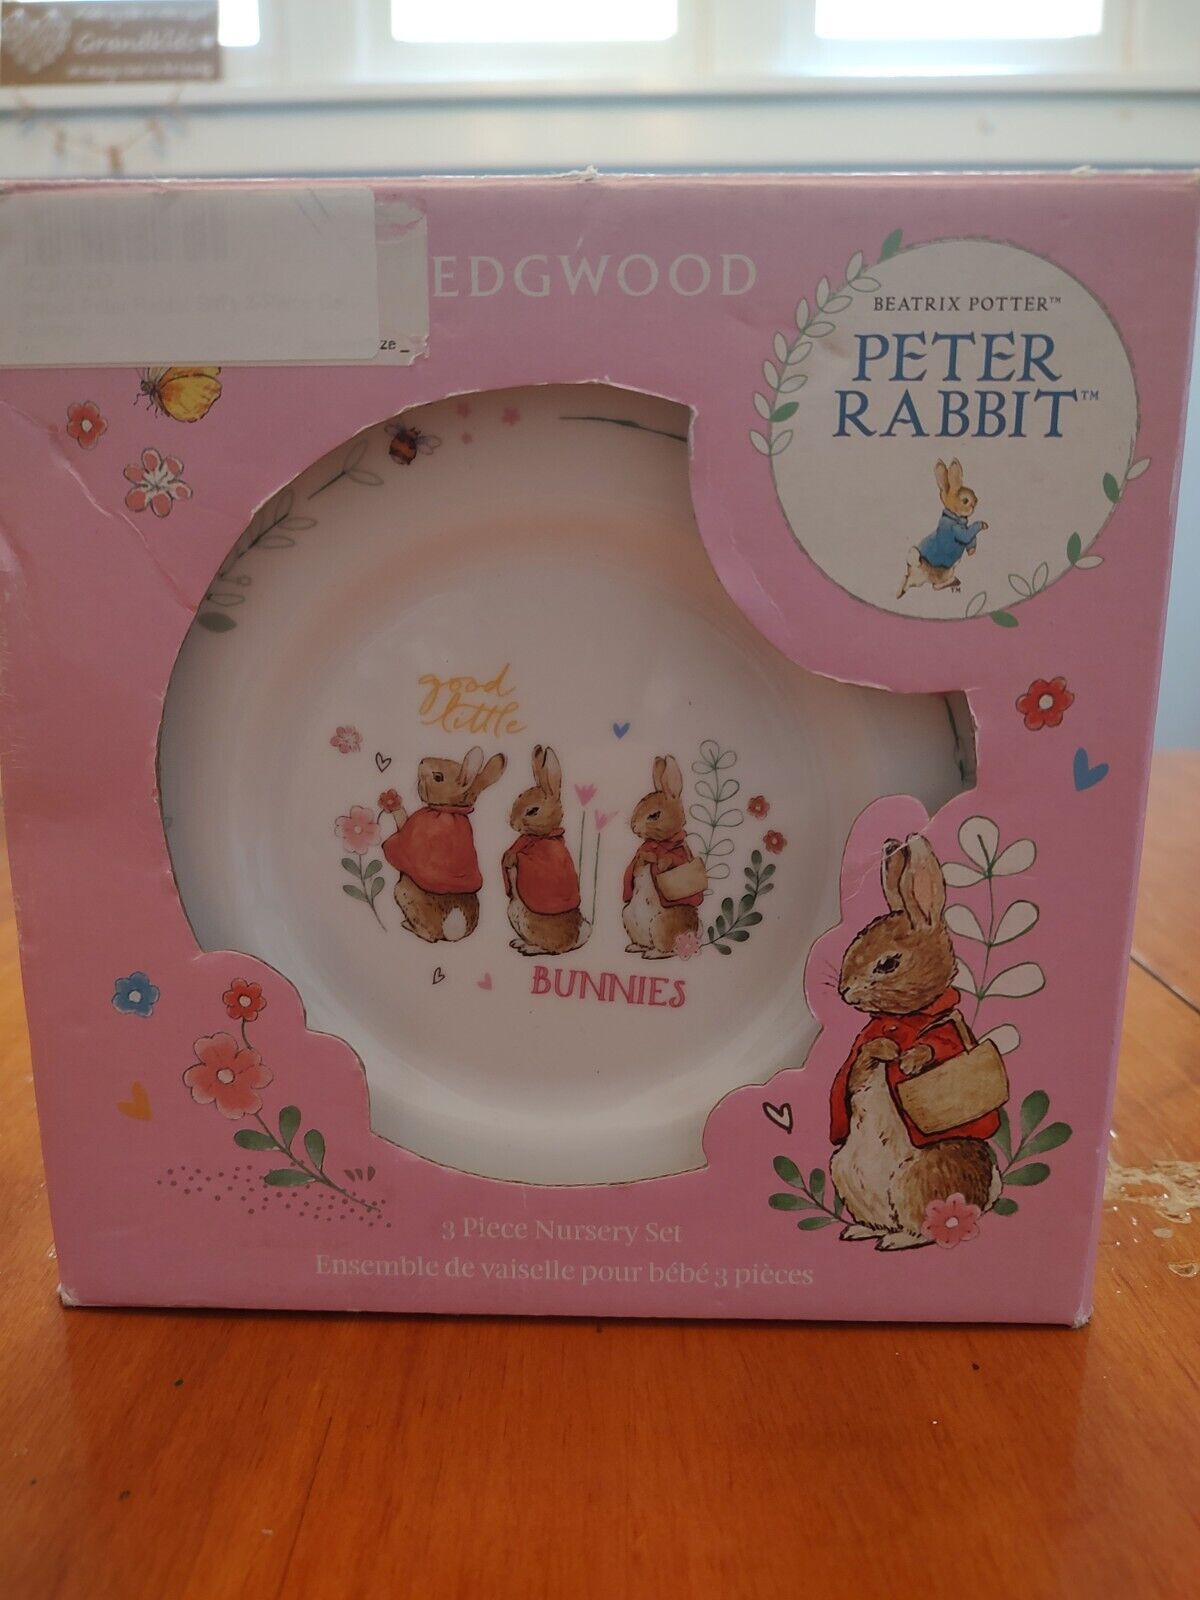 Wedgwood Beatrix Potter Peter Rabbit 3-Piece Nursery Set, 2018 Pink. EB7